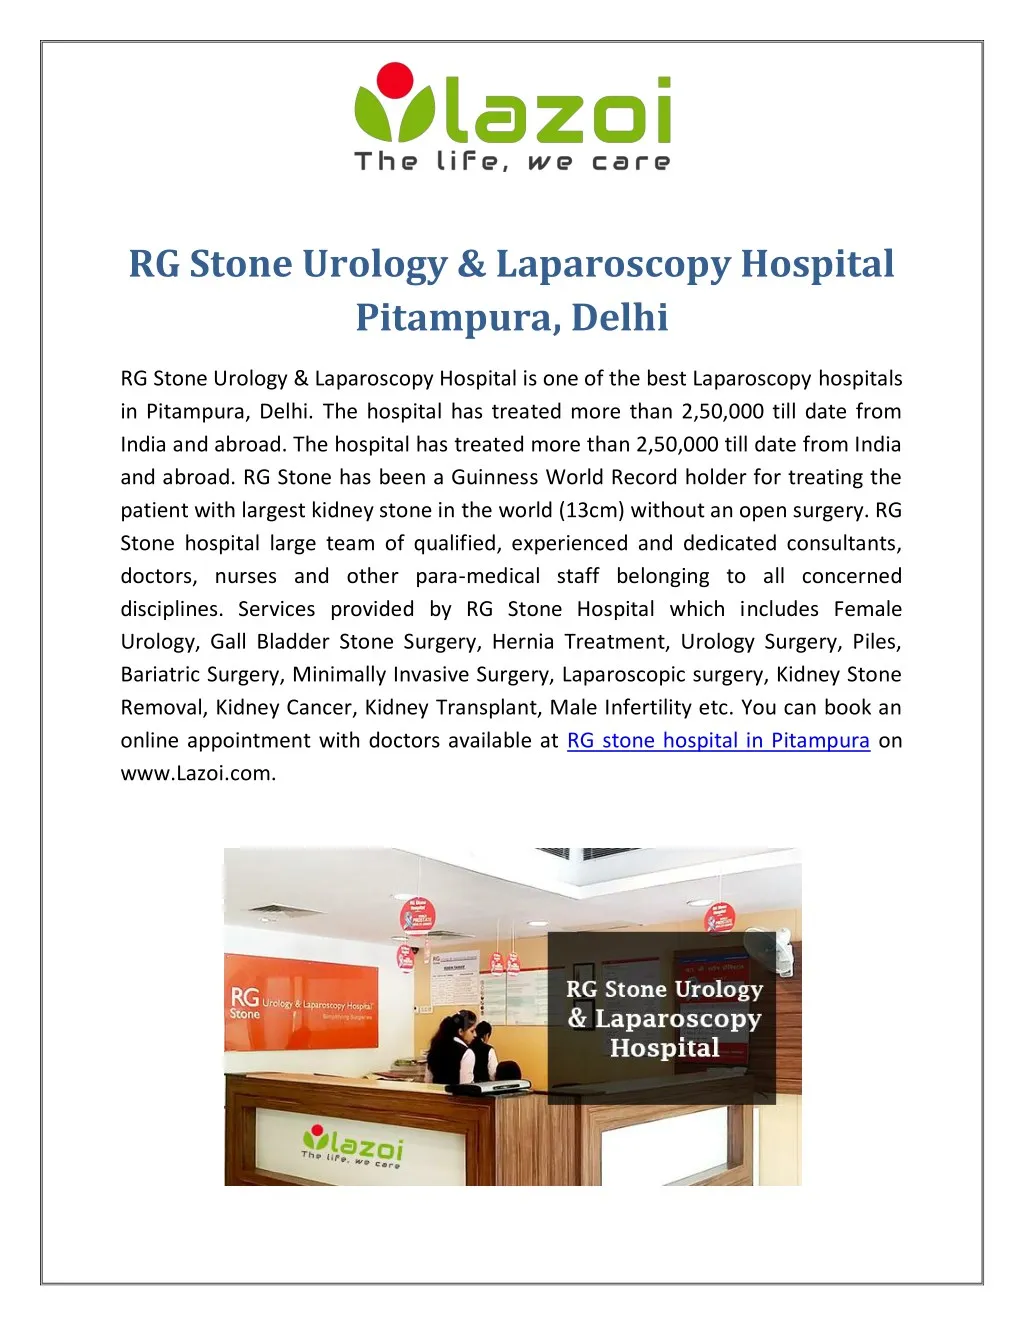 rg stone urology laparoscopy hospital pitampura